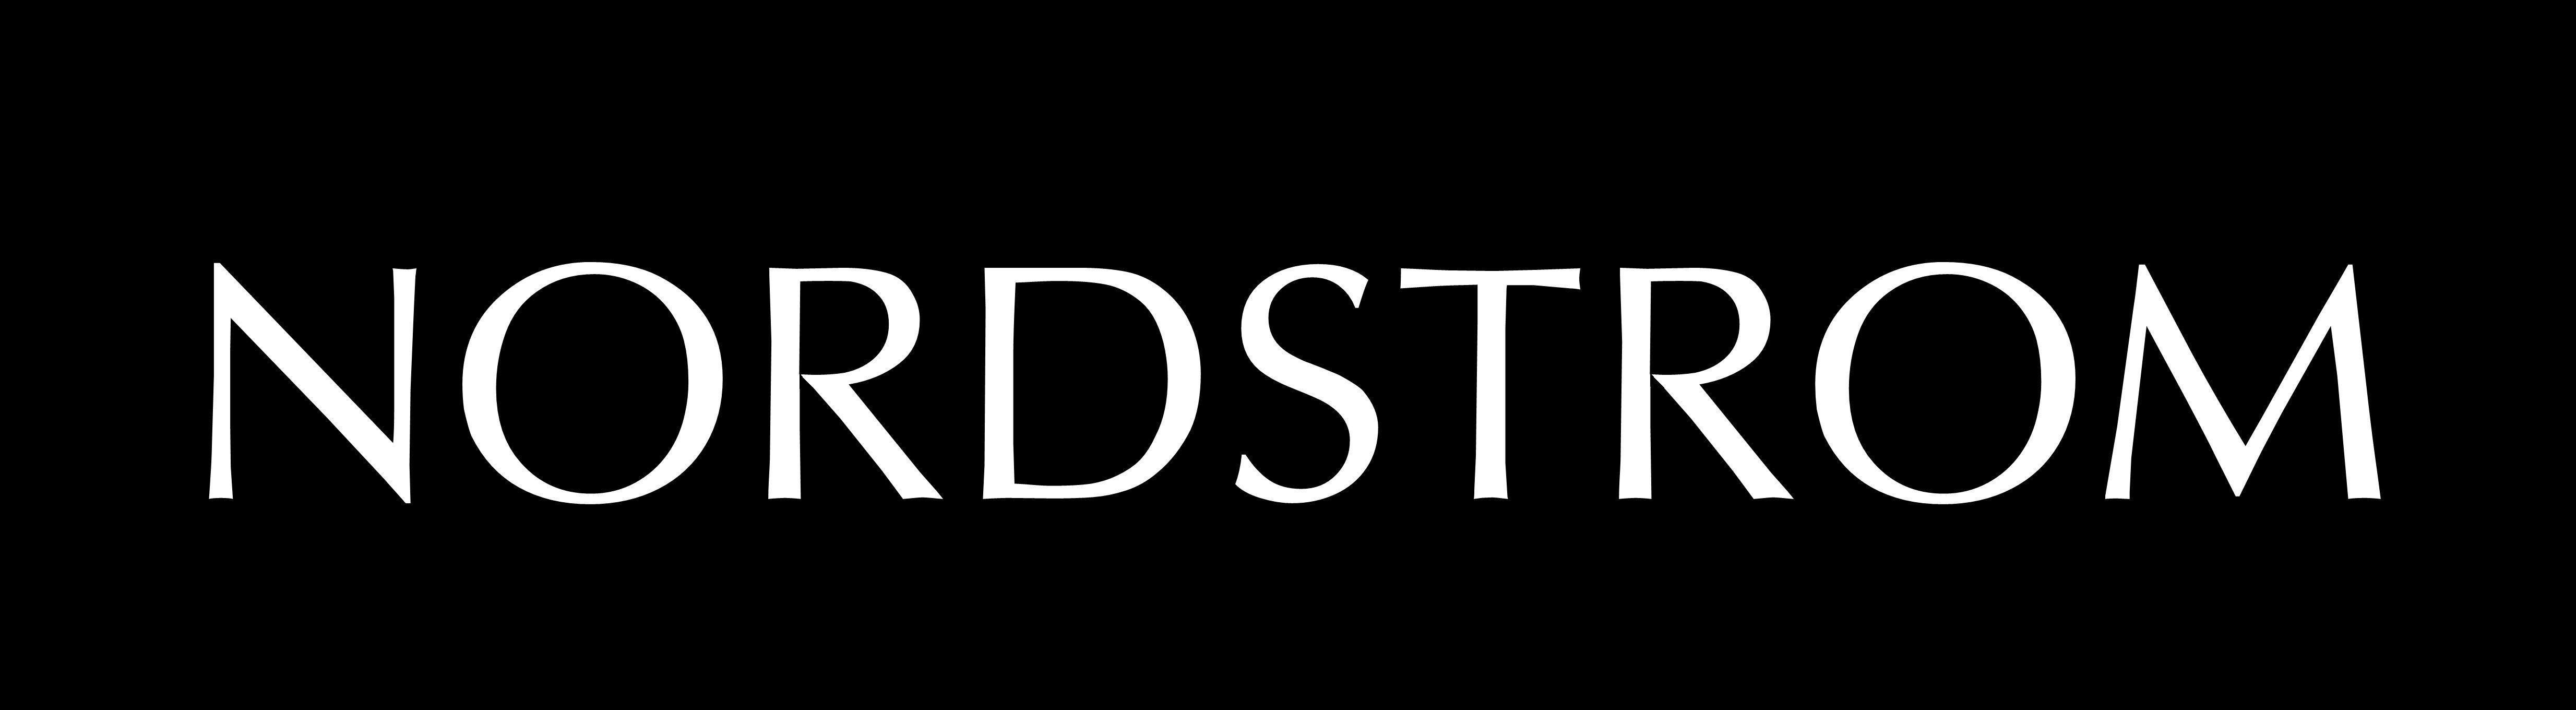 Nordstrom Official Logo - Nordstrom rack Logos